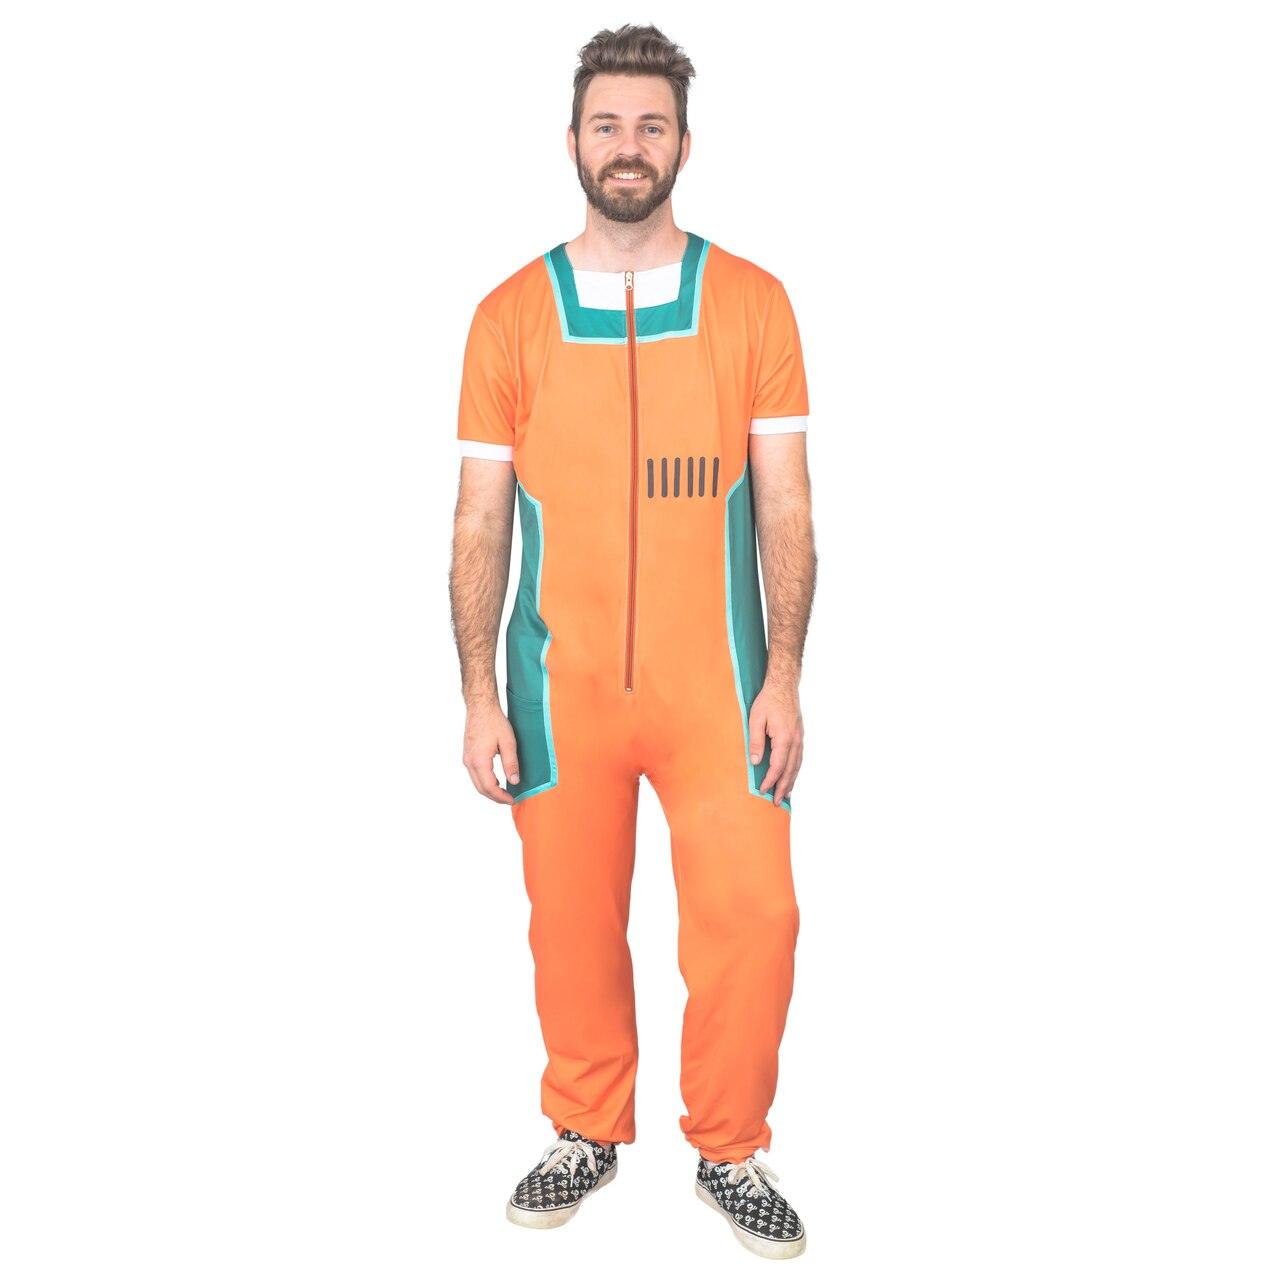 Men's Halloween Prisoner Orange Overall Costume